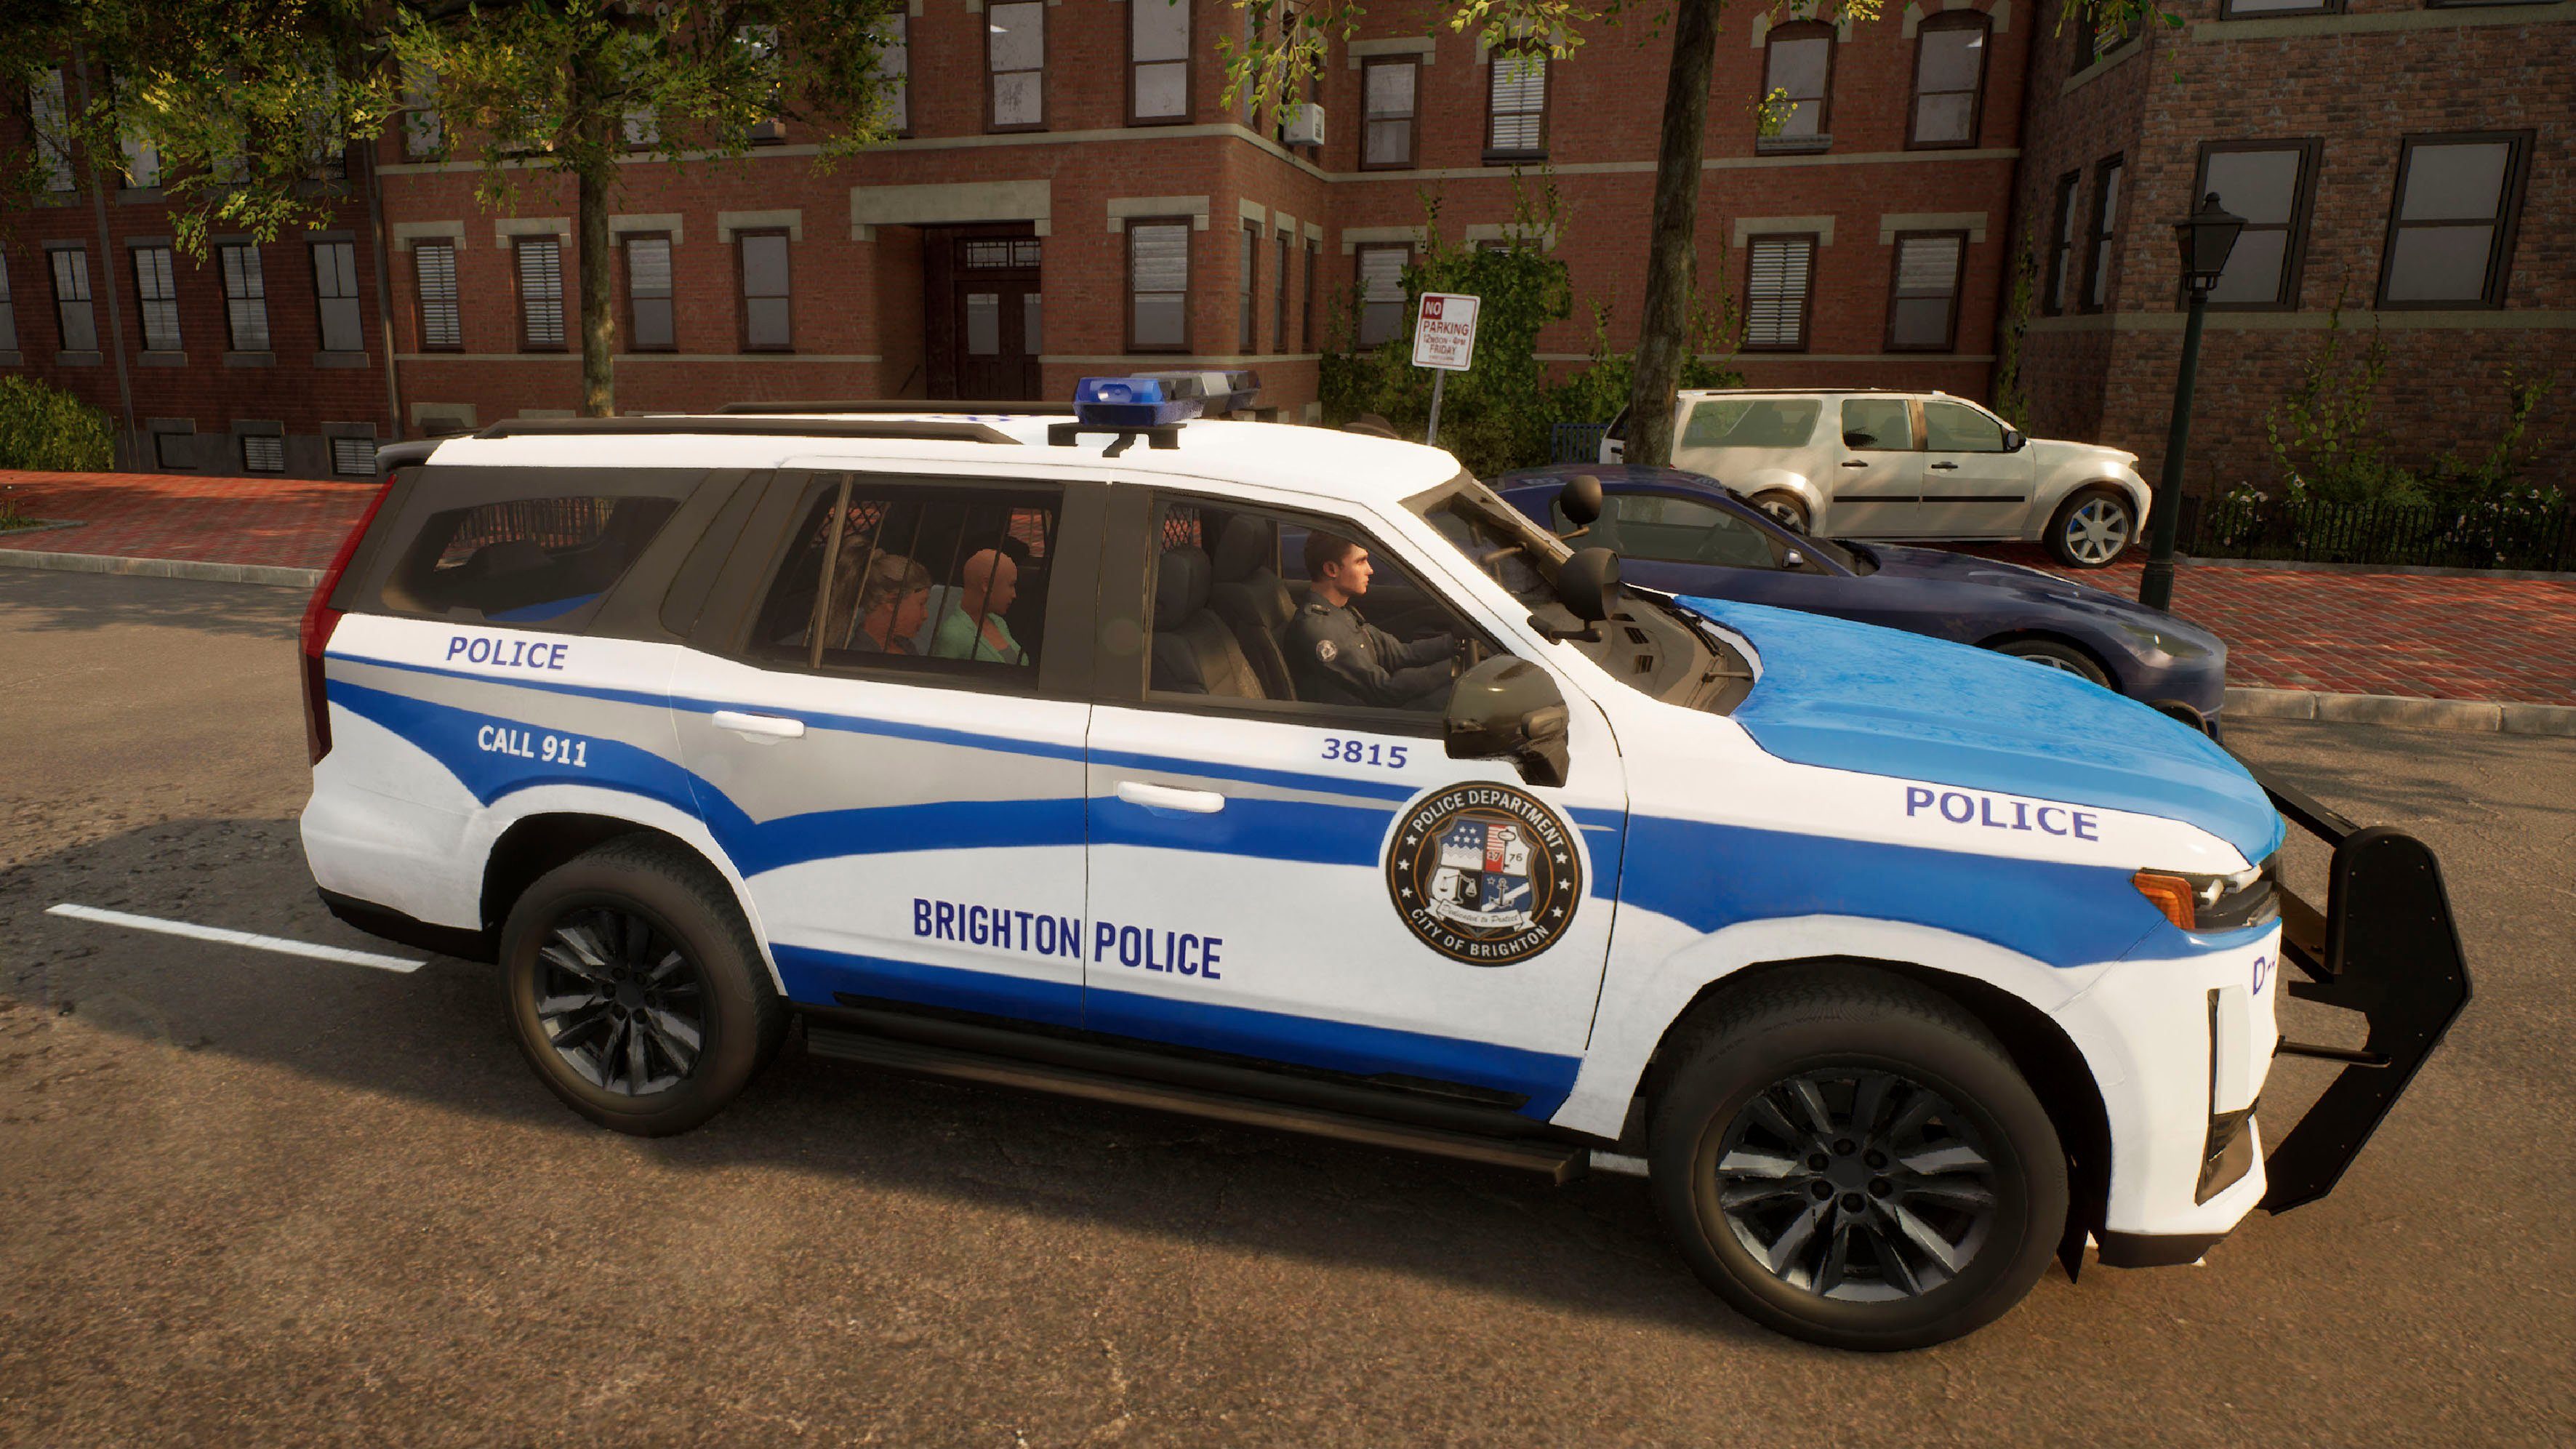 Police Patrol Officers PlayStation Astragon 5 Simulator: